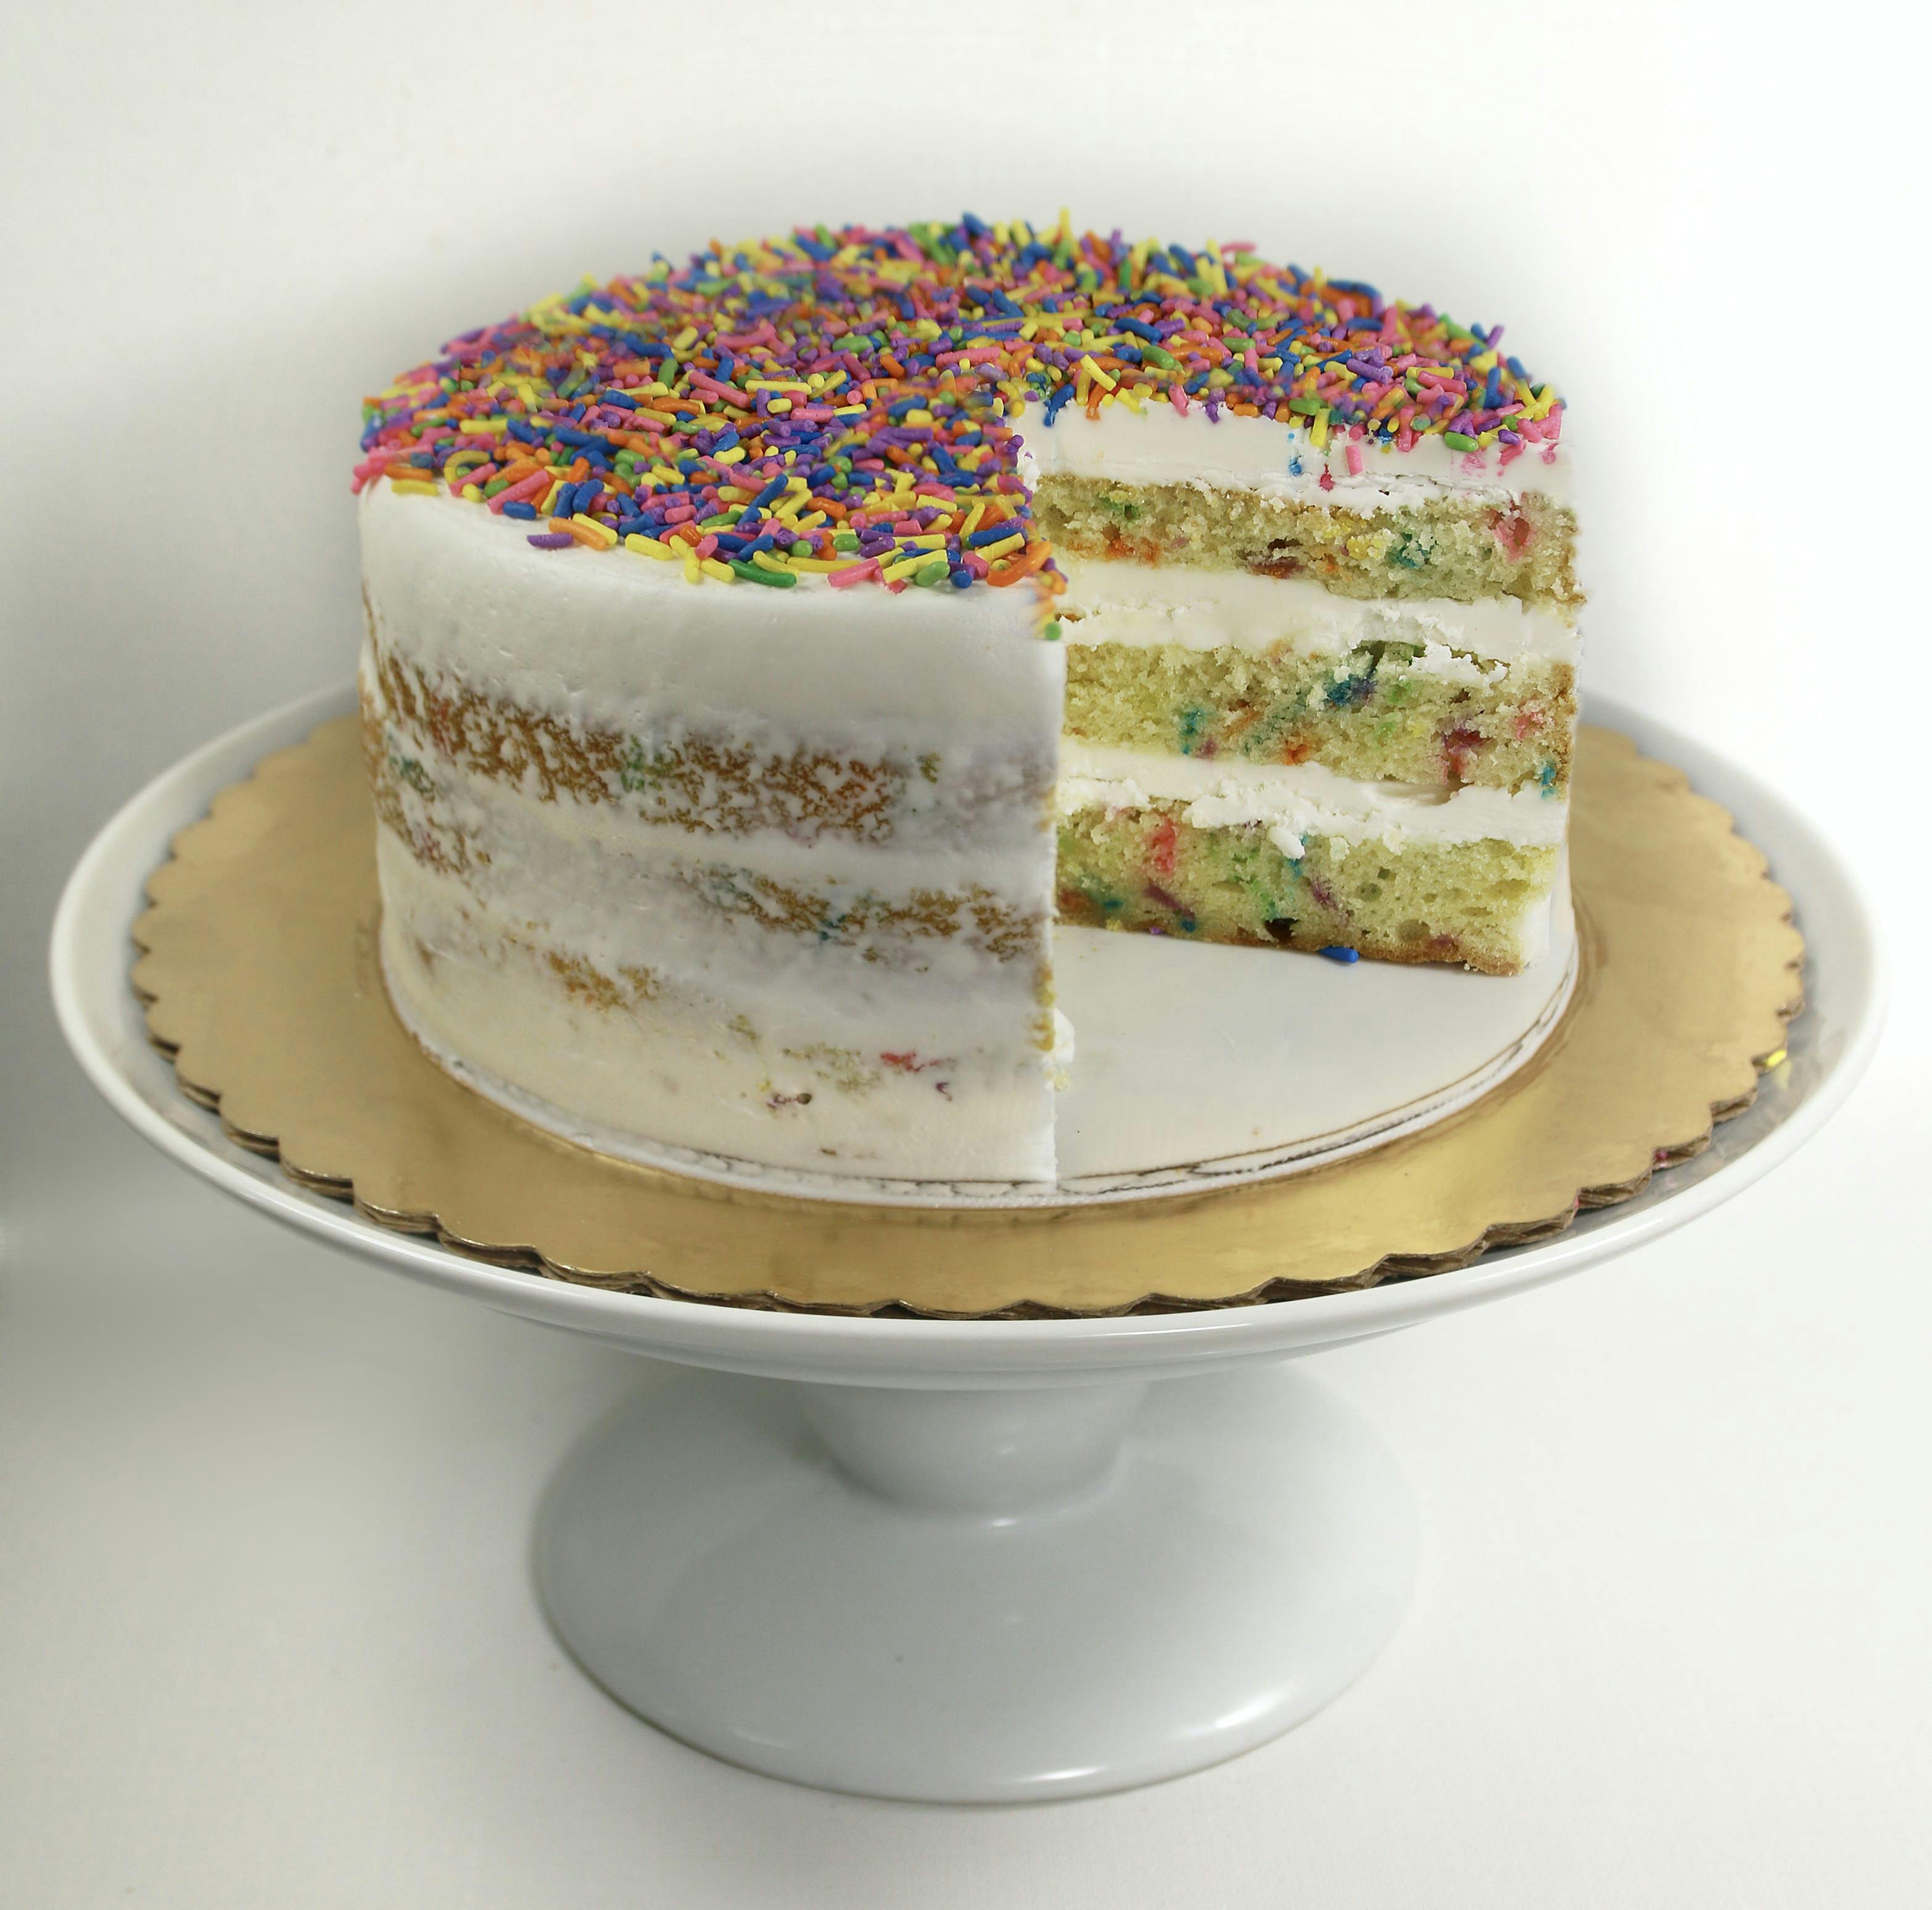 Are Birthday Cake Airheads Good? | POPSUGAR Food